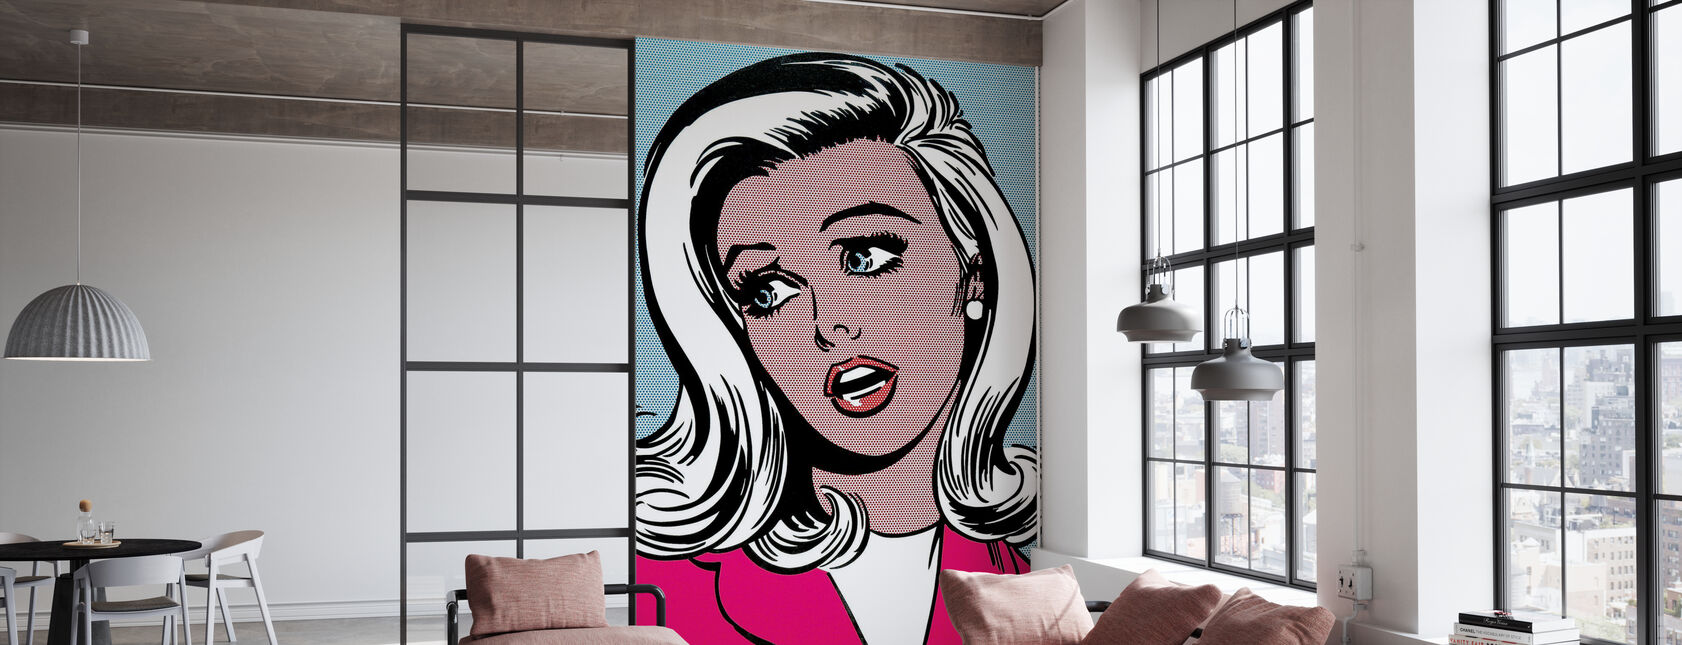 Girl in Pink - Wallpaper - Office